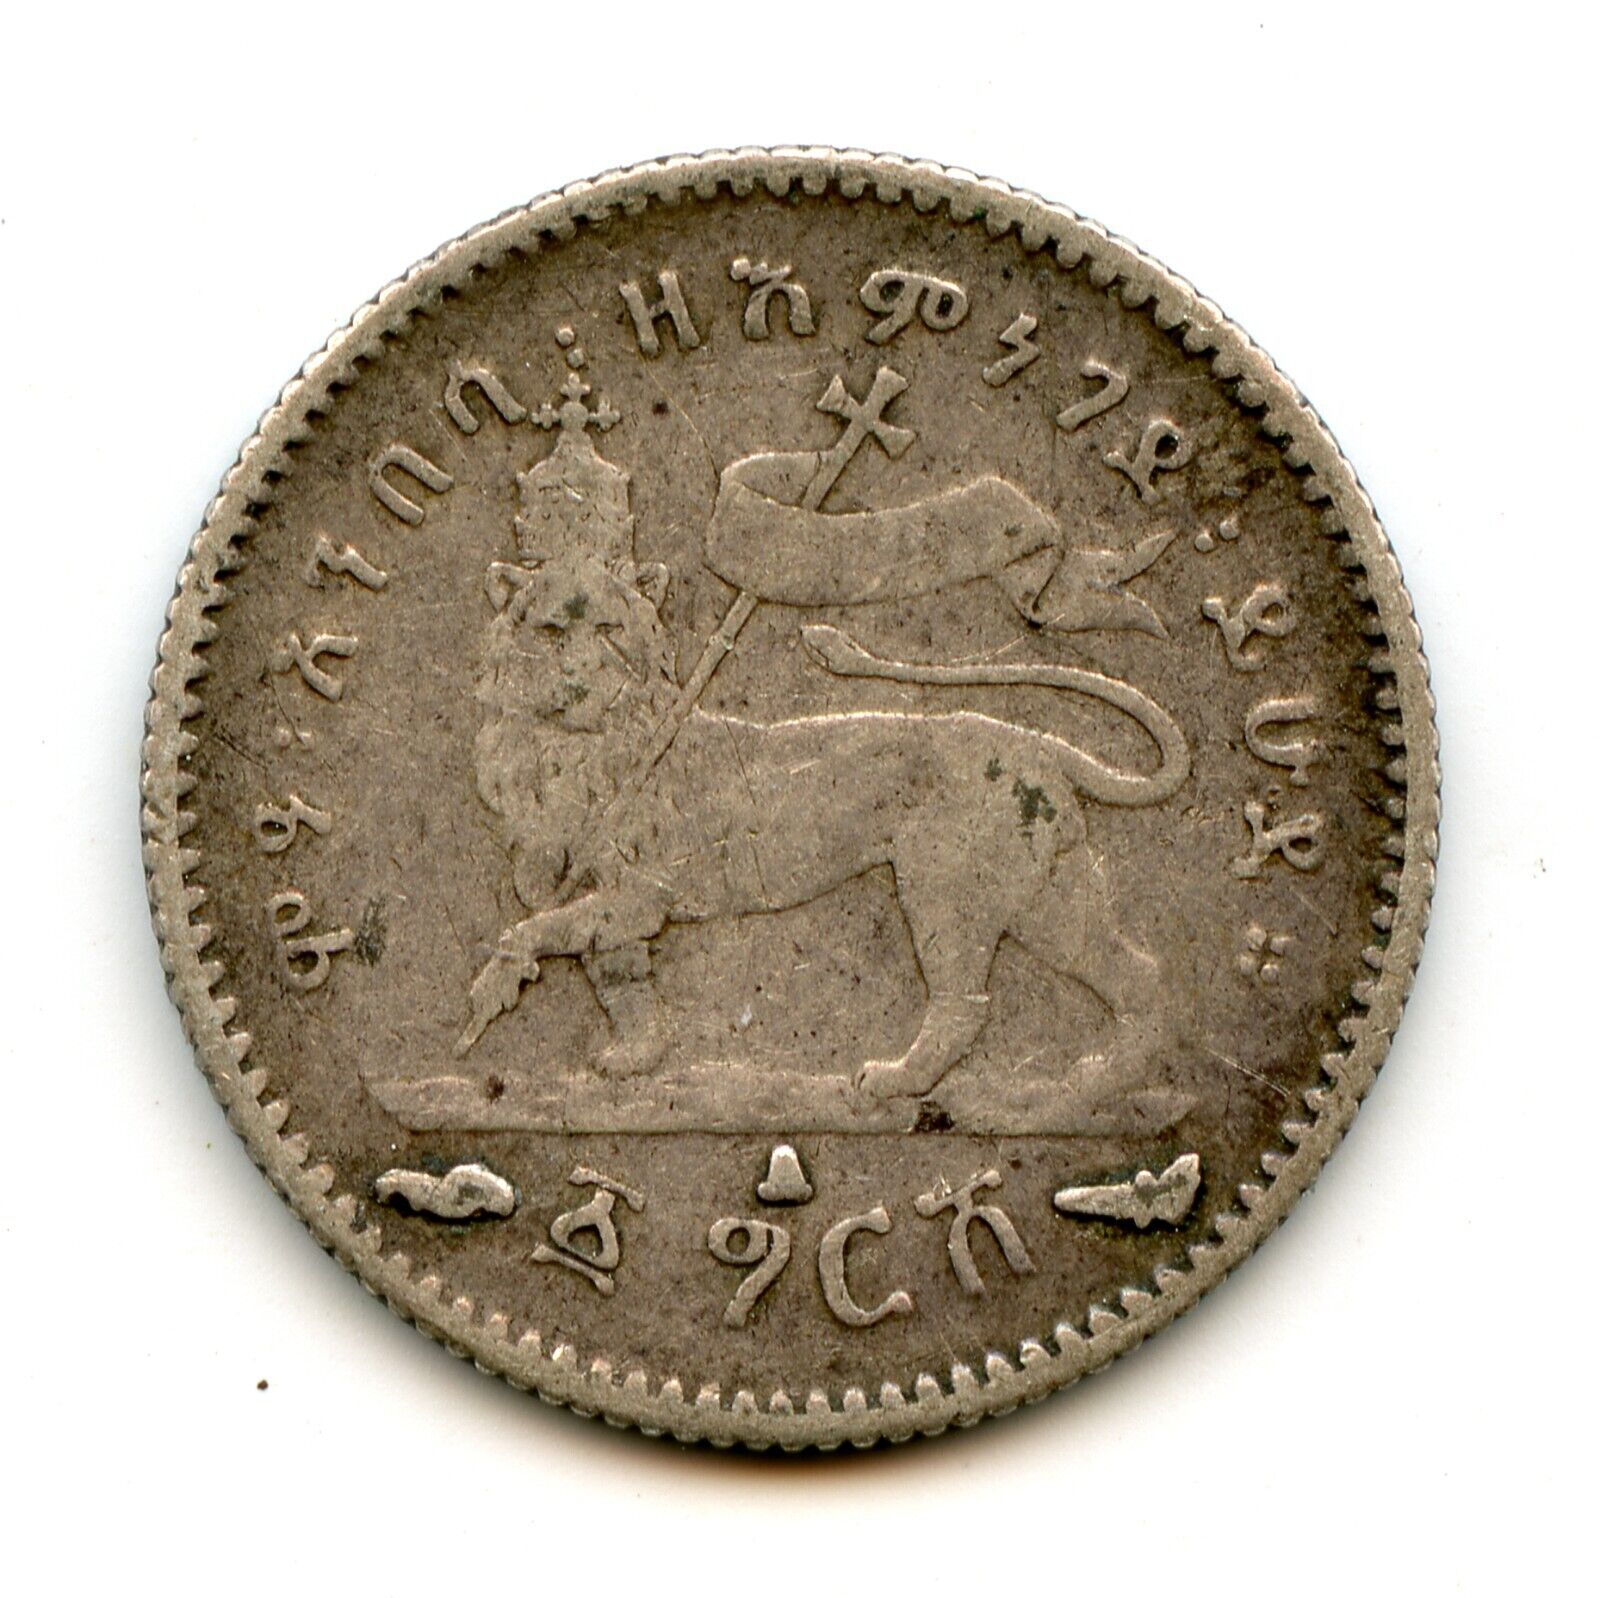 Genuine Silver 1903 Ethiopia Gersh | VF Condition